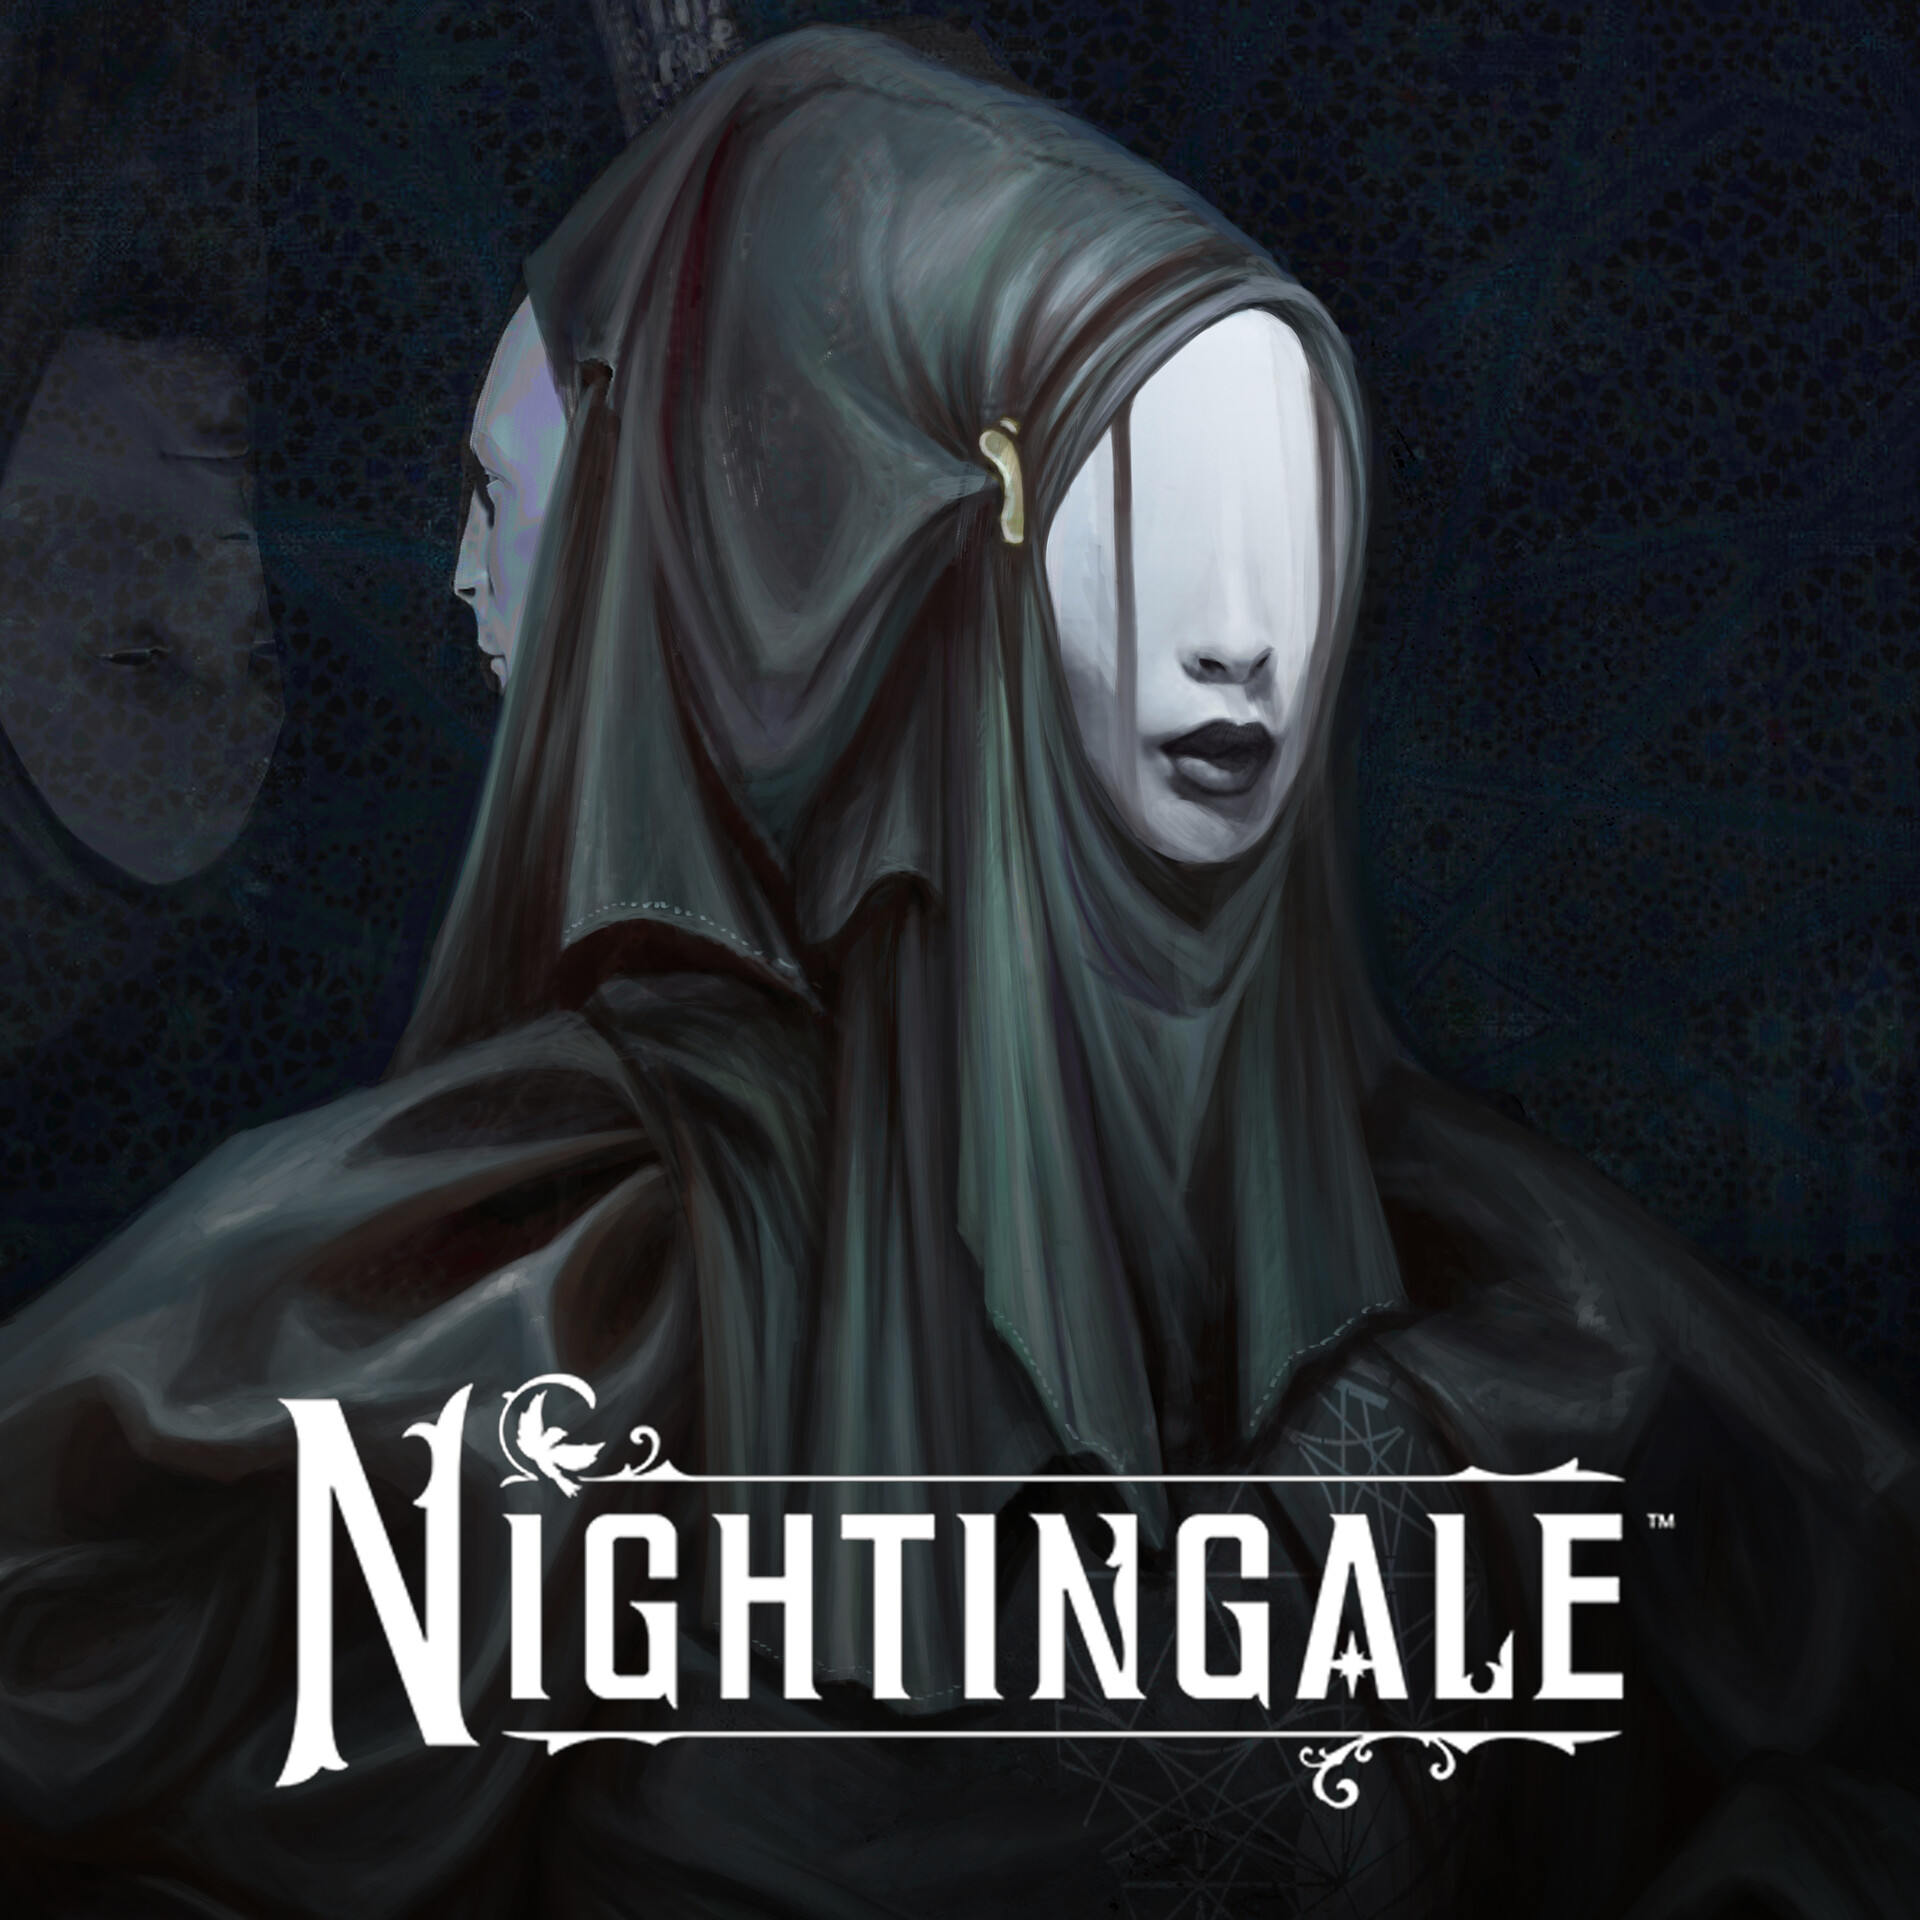 Nightingale игра купить